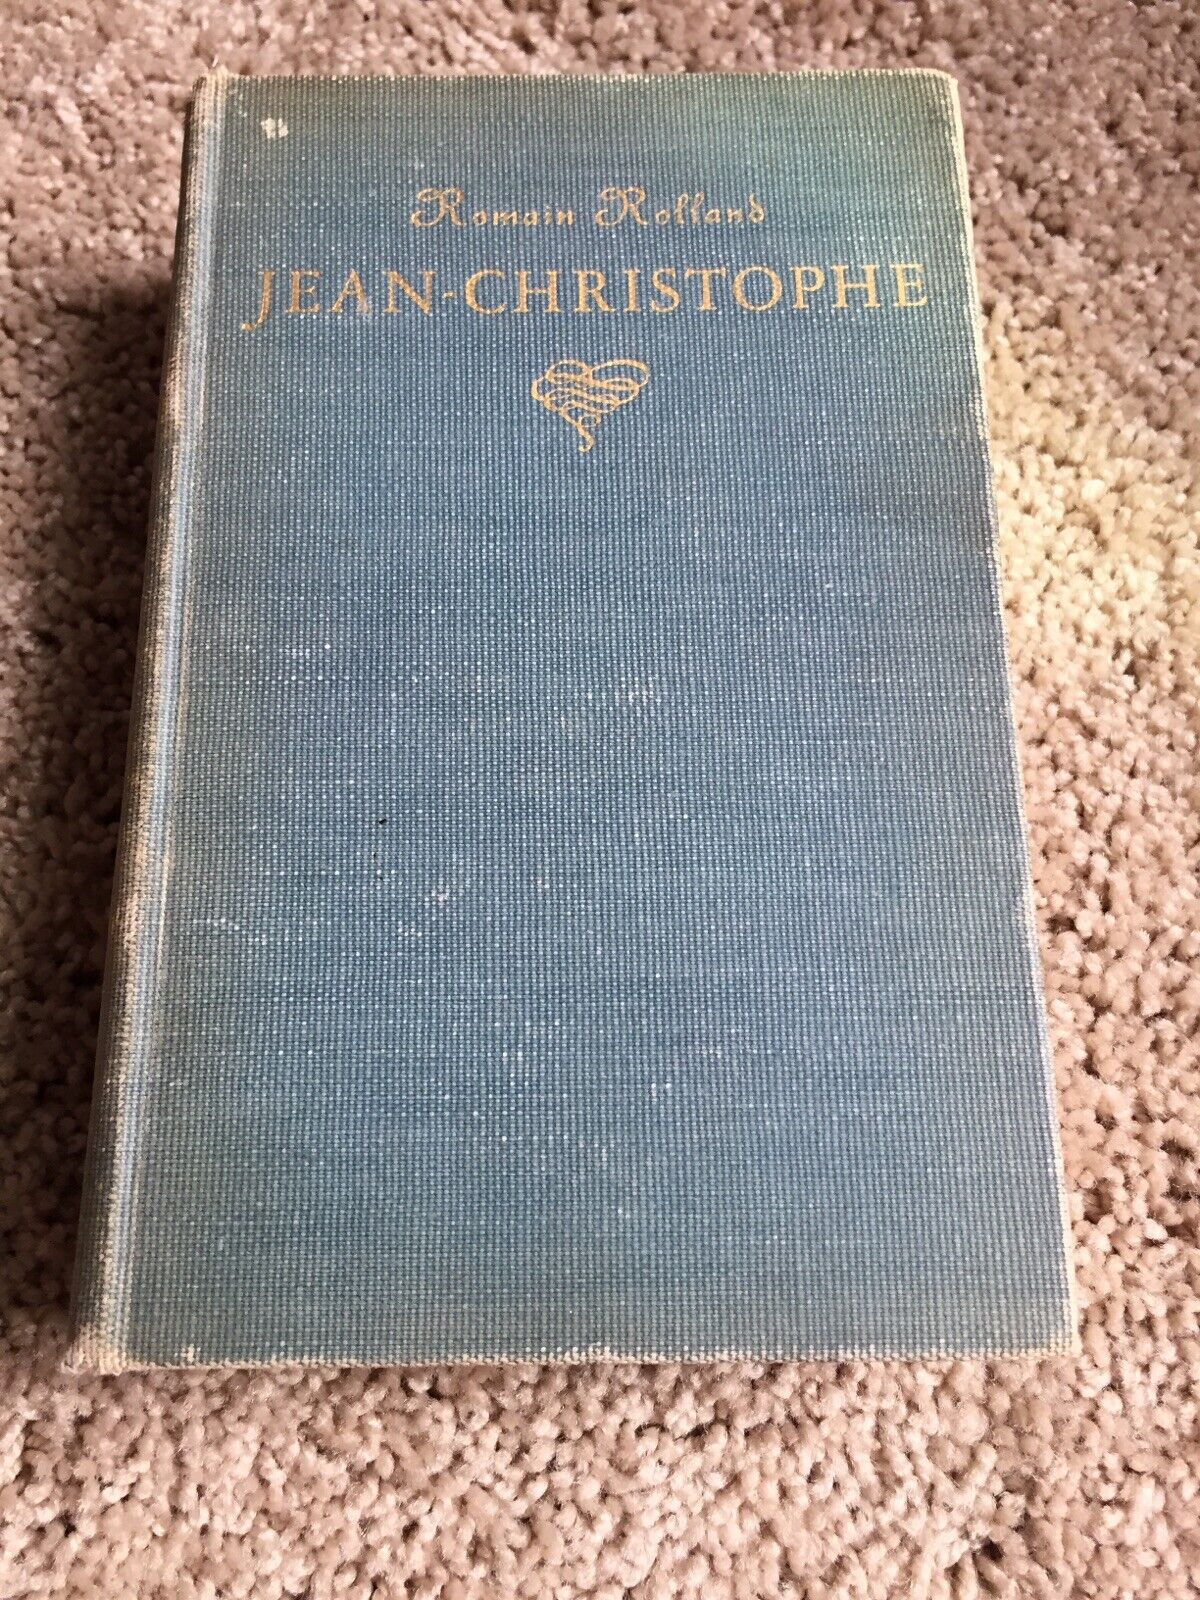 VINTAGE 1913 ROMAIN ROLLAND\'S JEAN-CHRISTOPHE TRANSLATED HC BOOK EXLIB